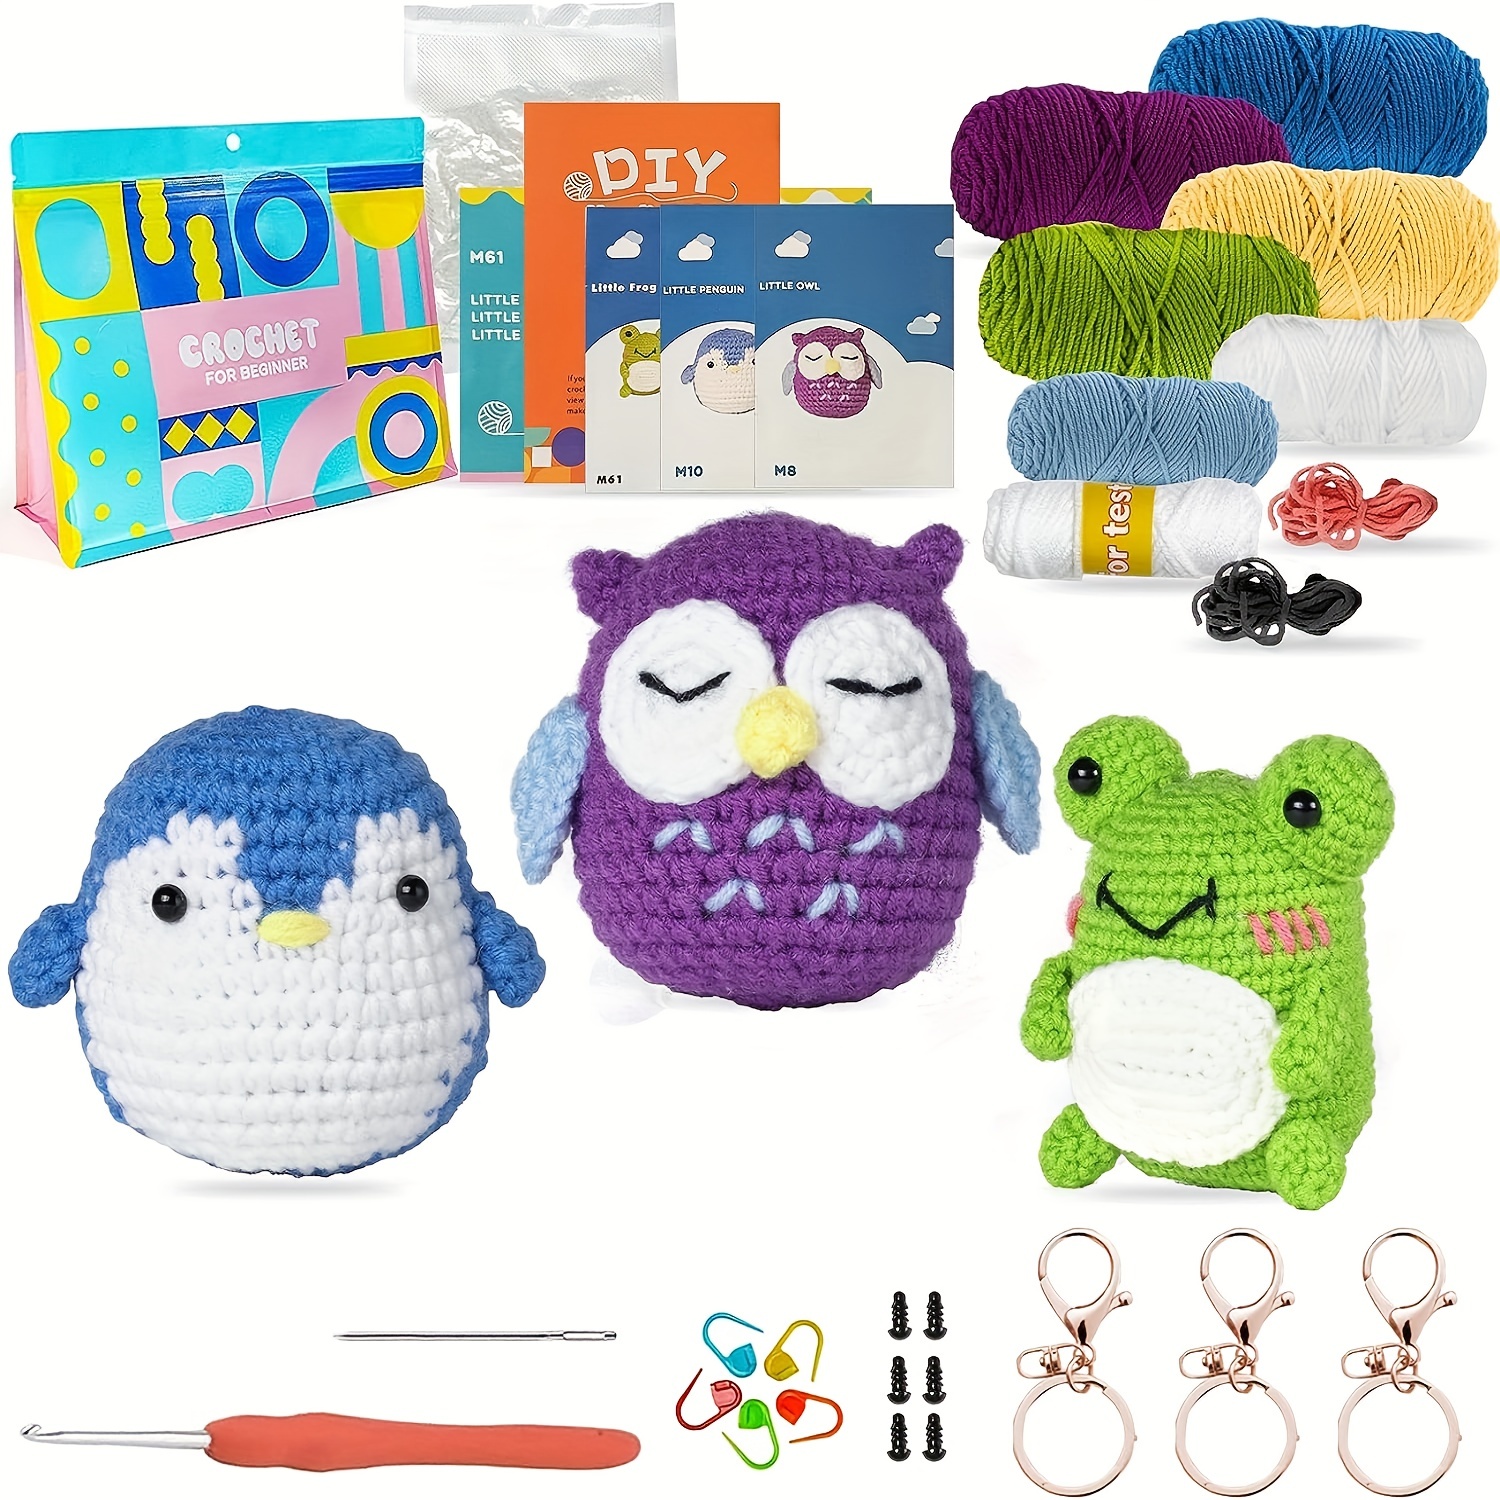 J Mark j mark crochet kit for beginners adults and kids -1320 yards  knitting kit with yarn set crochet hook & more